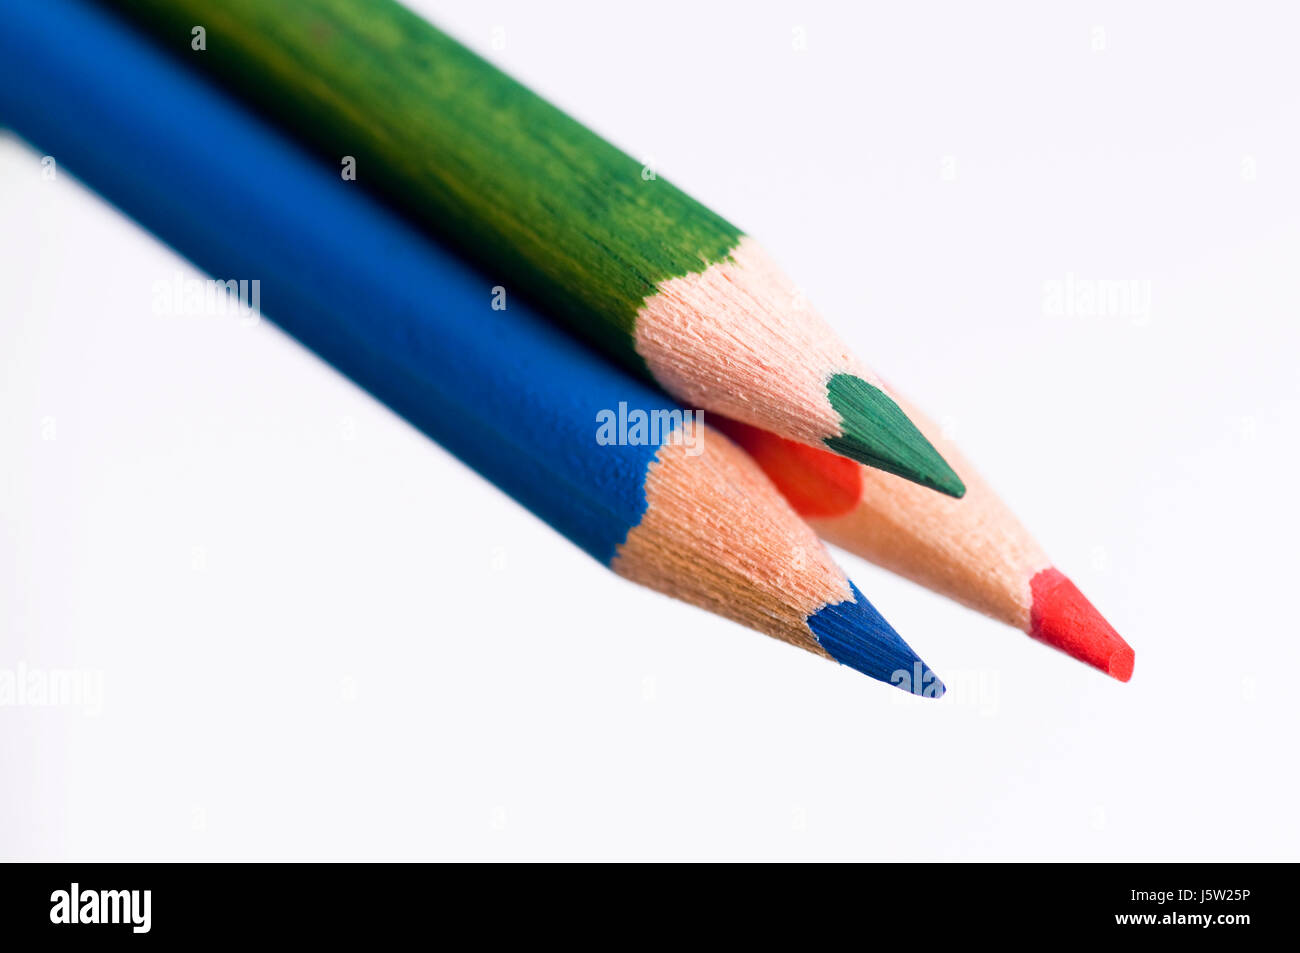 colour coloured colored pencils pens blue colour green wood coloured colourful Stock Photo